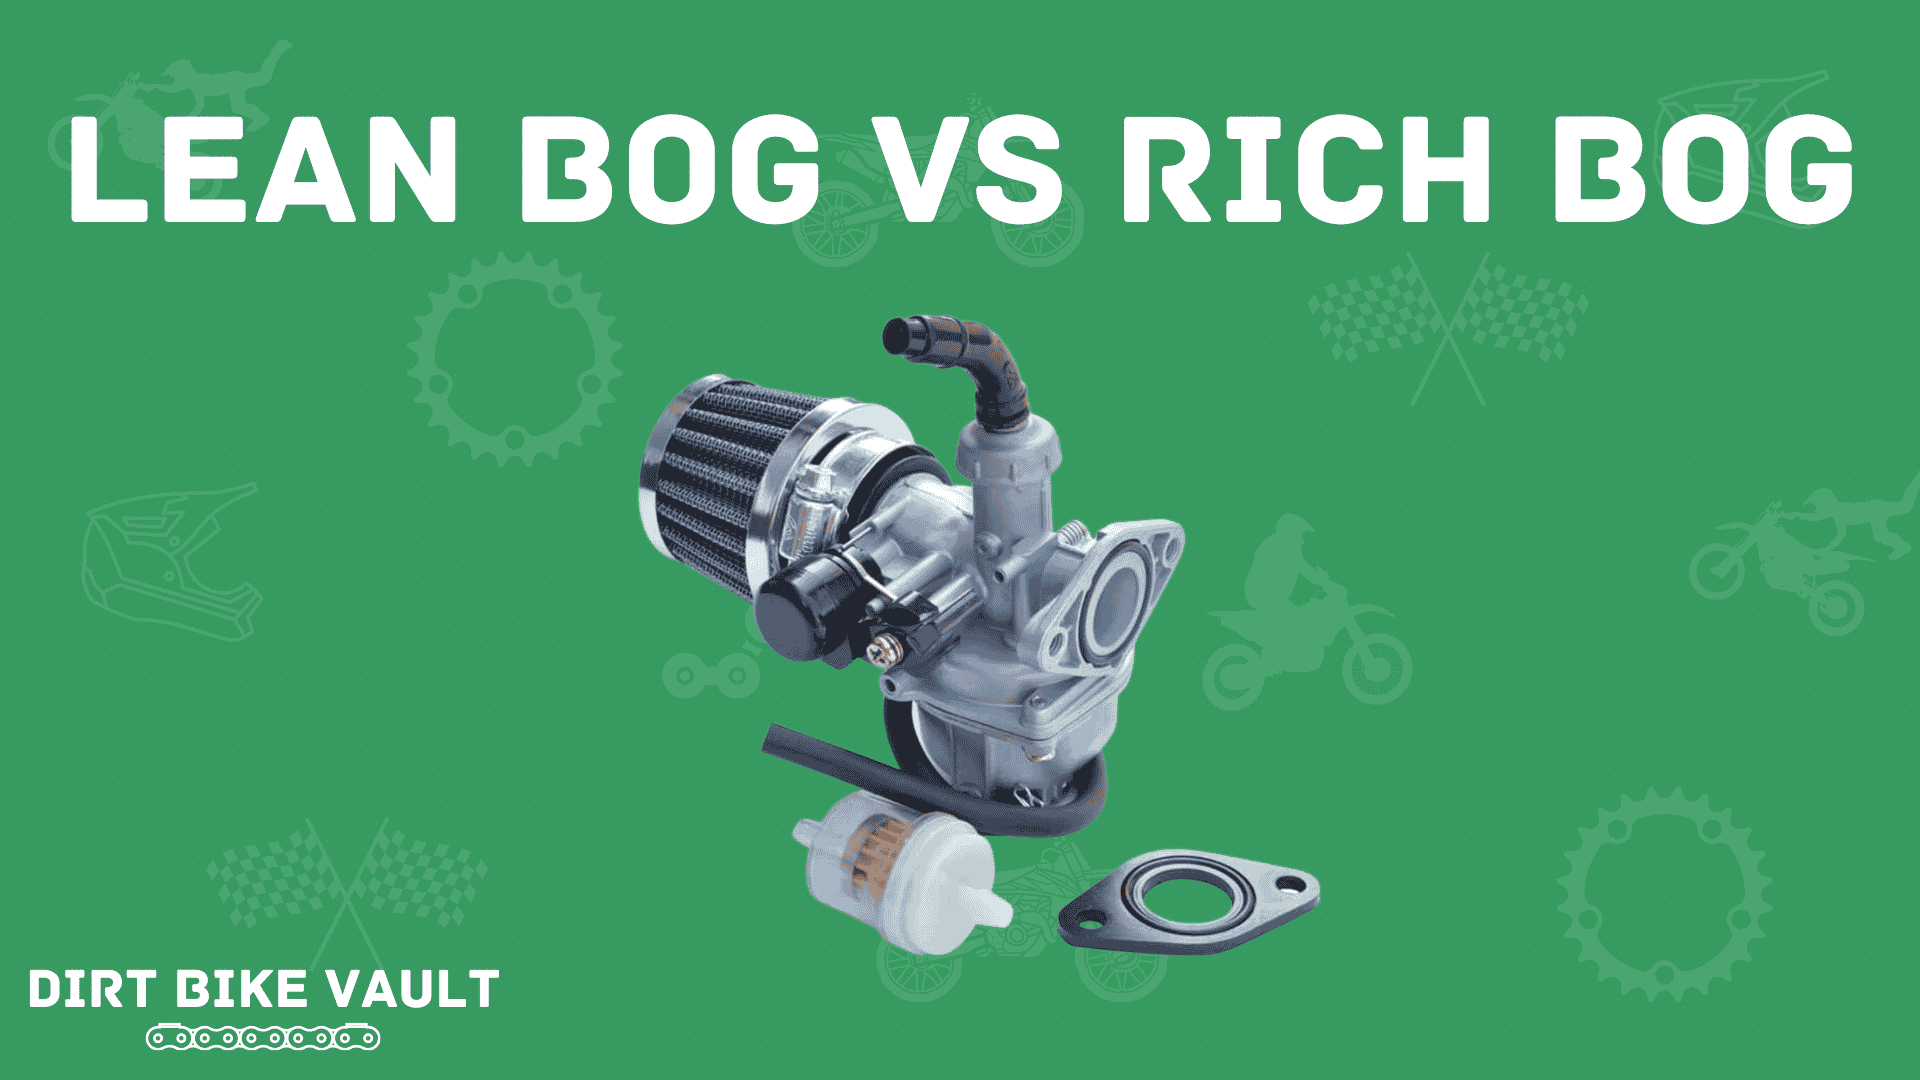 lean bog vs rich bog in white text and image of carburetor on green background